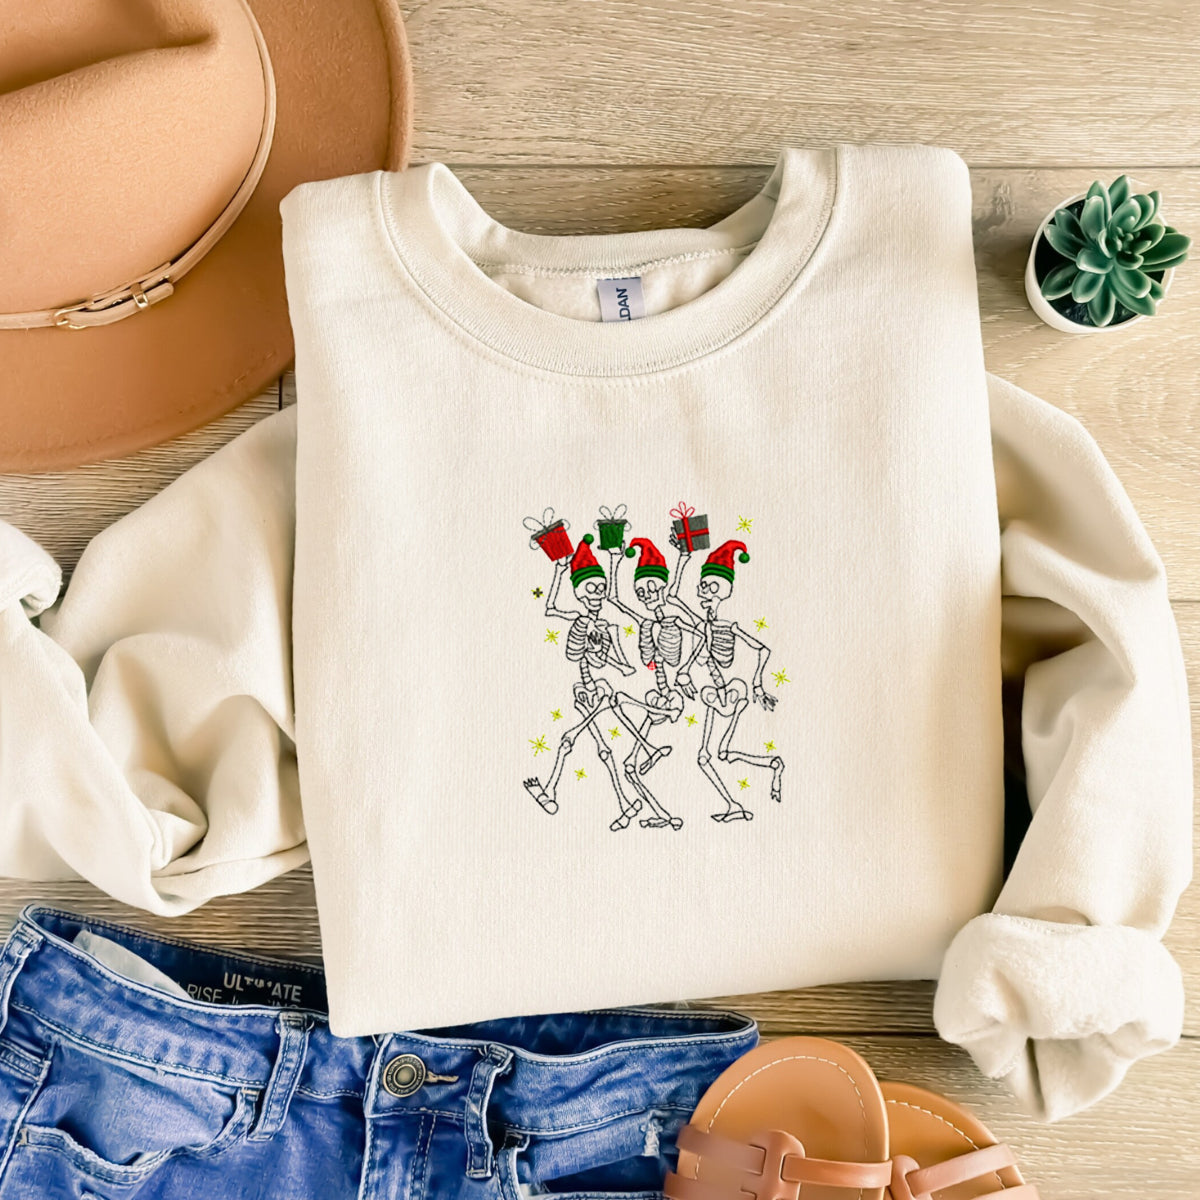 Dancing Skeletons Sweatshirt, Merry Christmas Crewneck Embroidered